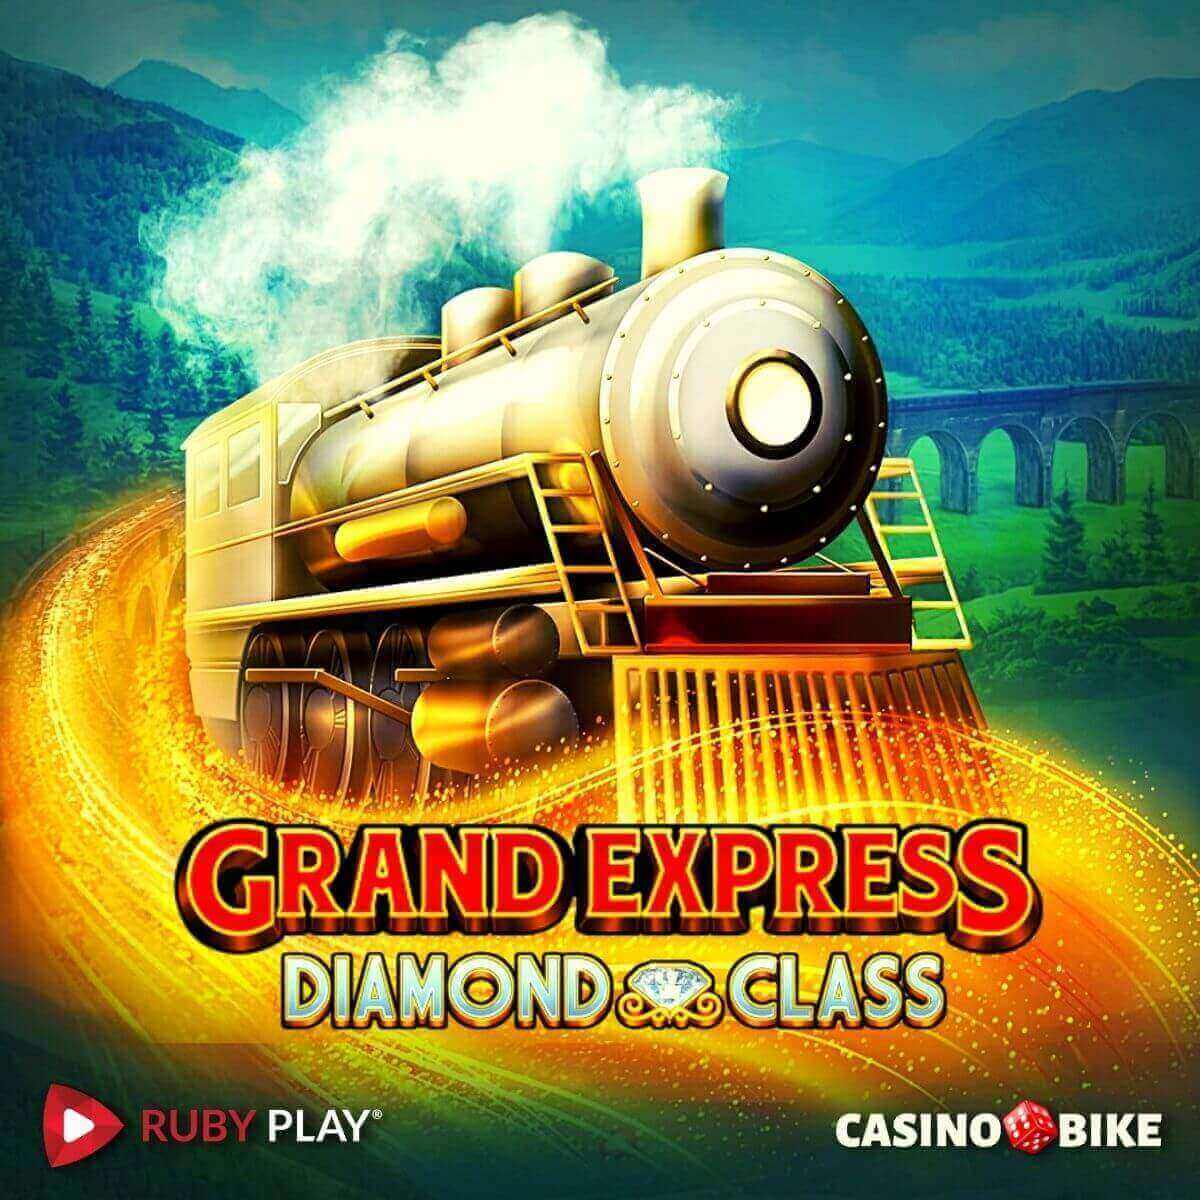 Grand Express Diamond Class Slot by Ruby Play Gaming